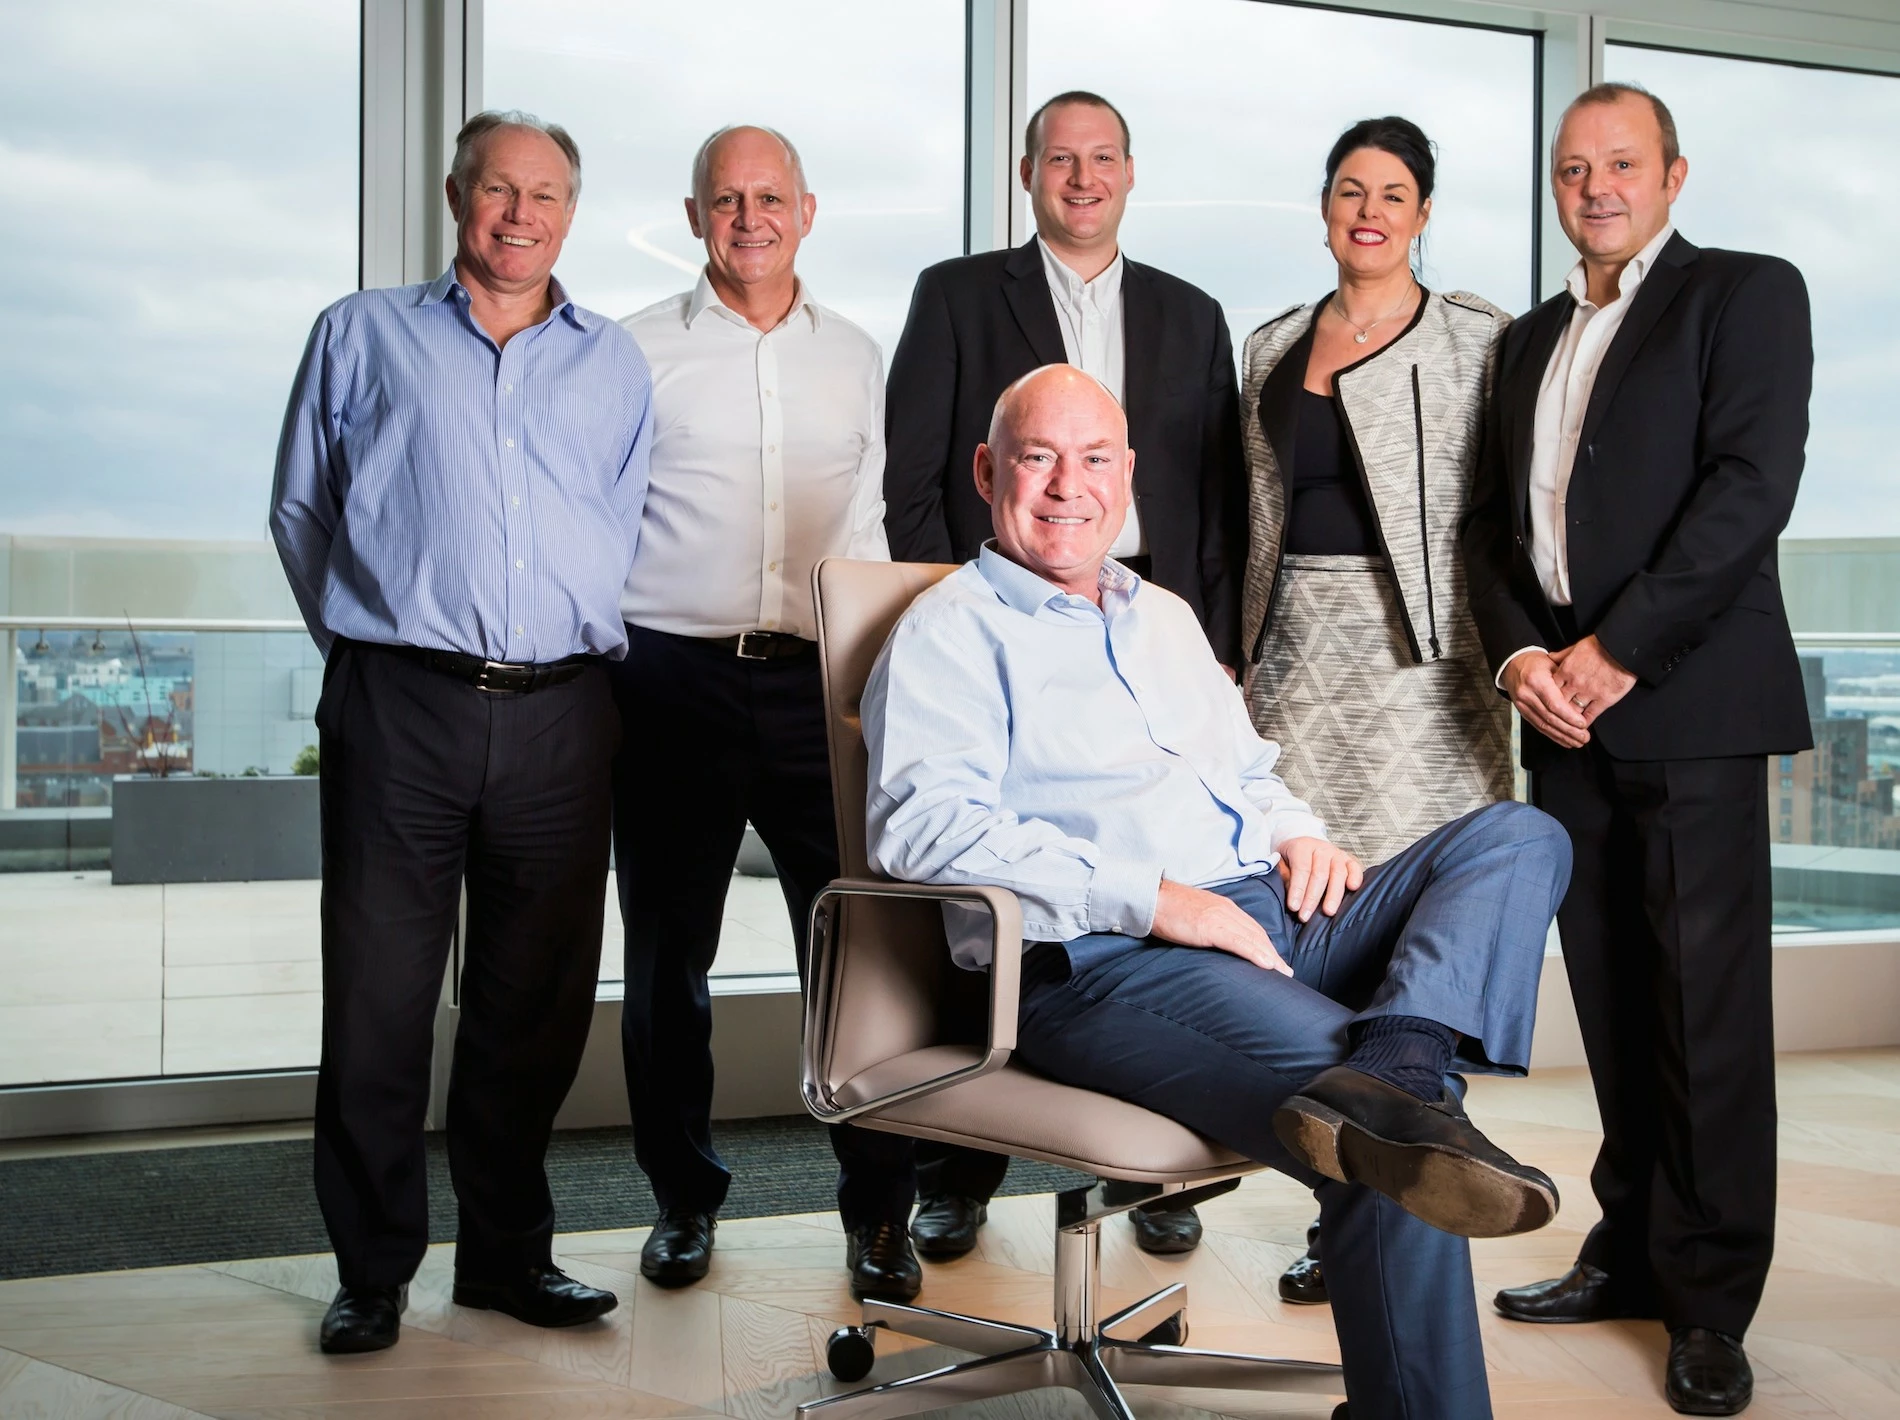 David Hodkin, Guy Jackson both Knaresborough Investments, Adam Gould, Fiona Conor, Scott Conor. Front Steve Parkin.